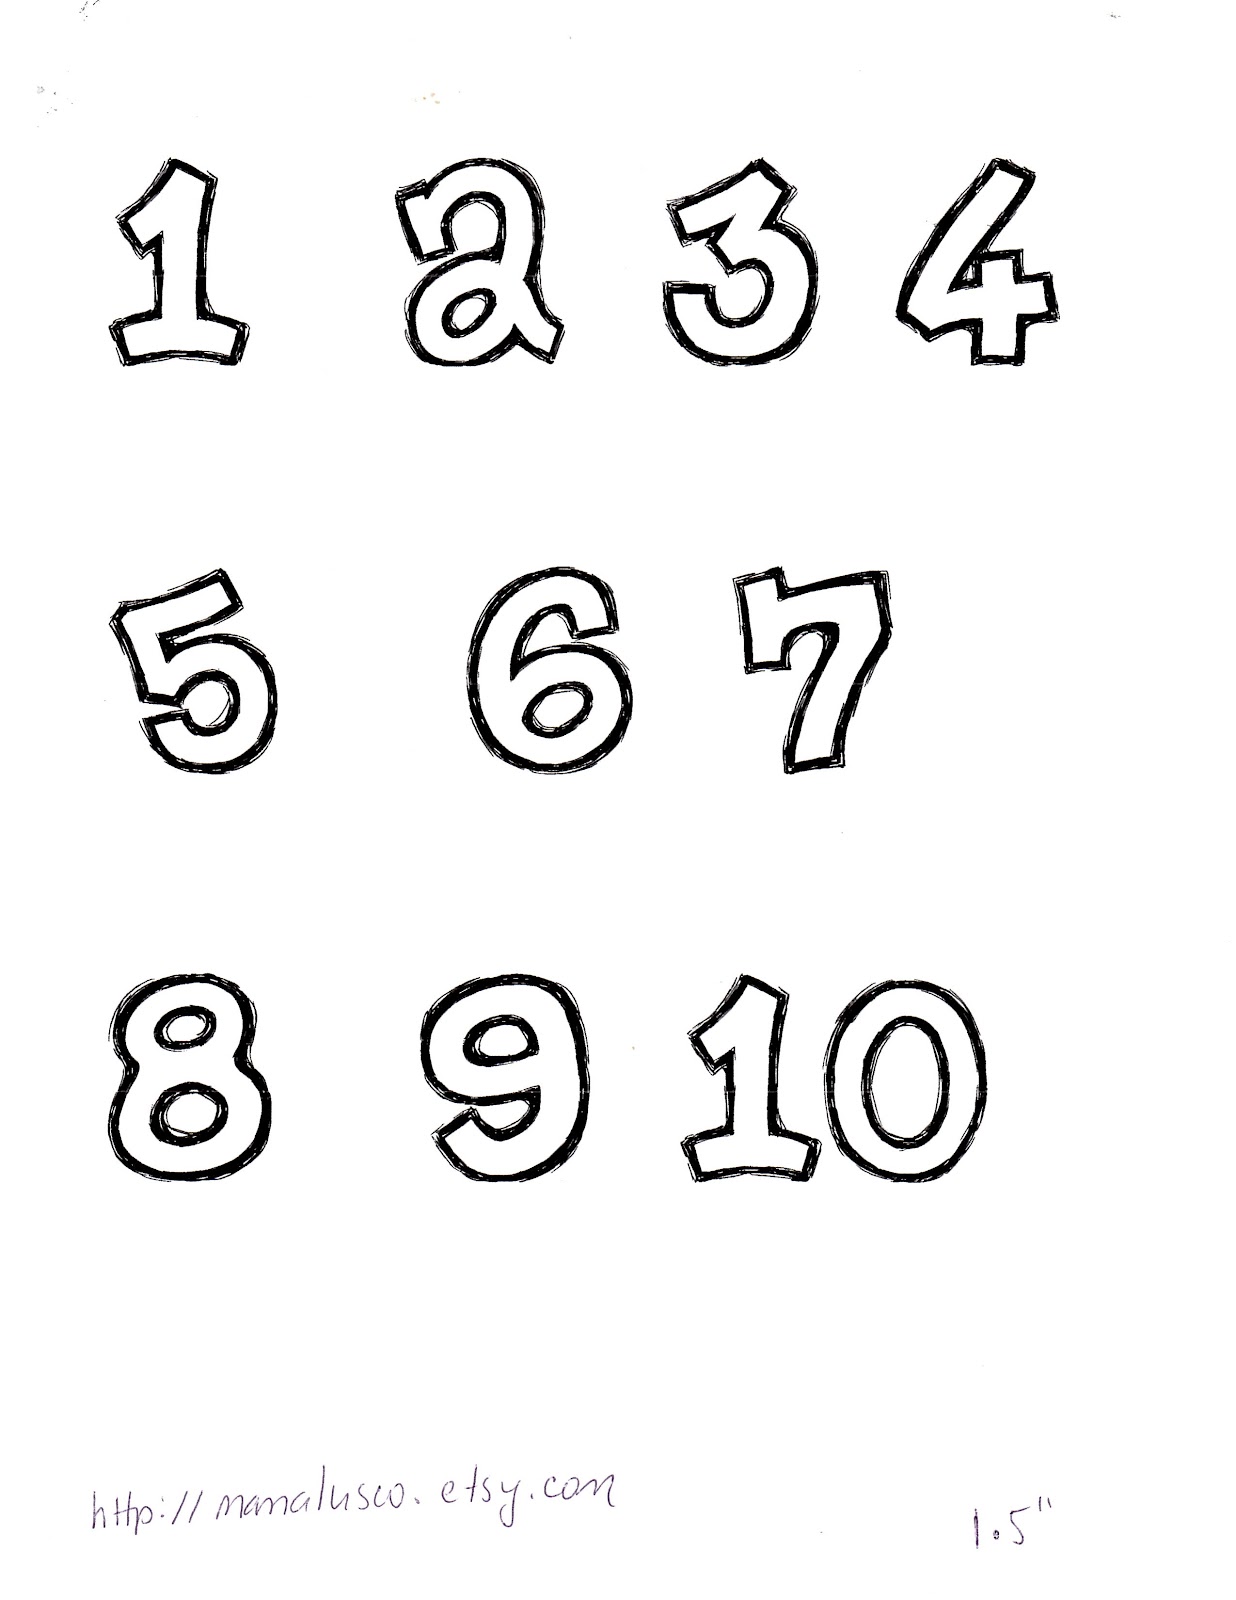 printable-numbers-1-10-template-8-best-images-of-printable-block